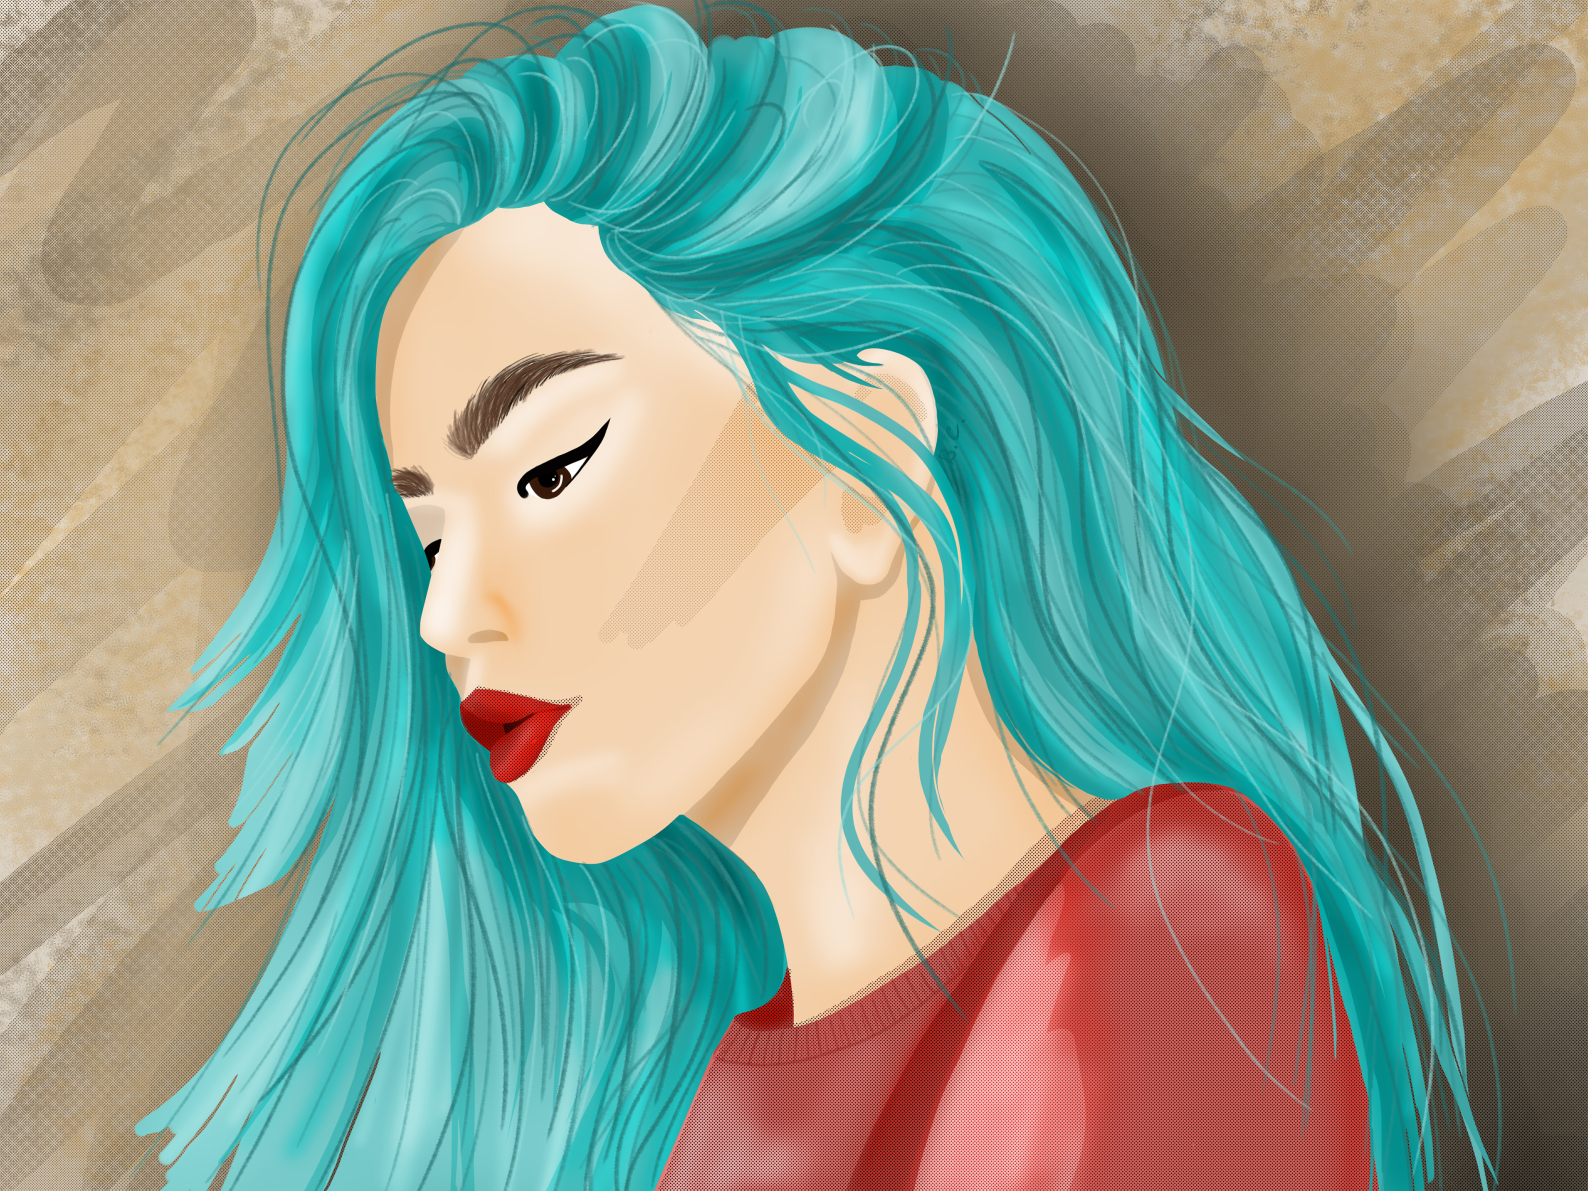 4. "Blue-haired girl illustration" - wide 1